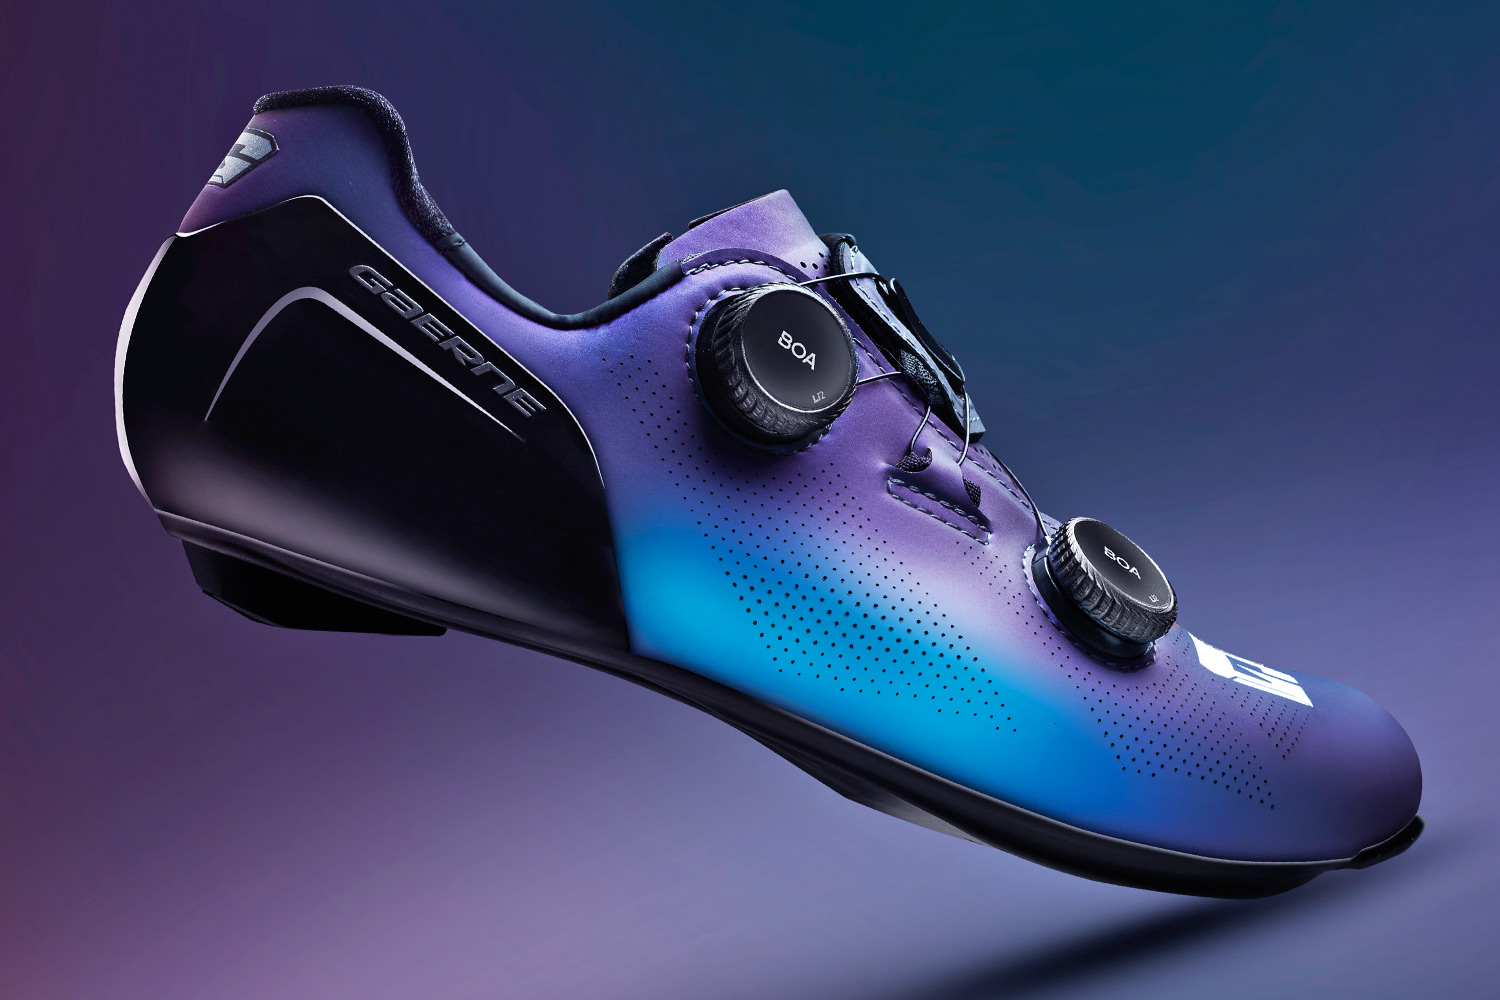 Gaerne-G.STL-road-shoes_top-tier-made-in-Italy-performance-carbon-road-race-bike-shoe_Iridium-iridescent-purple.jpg